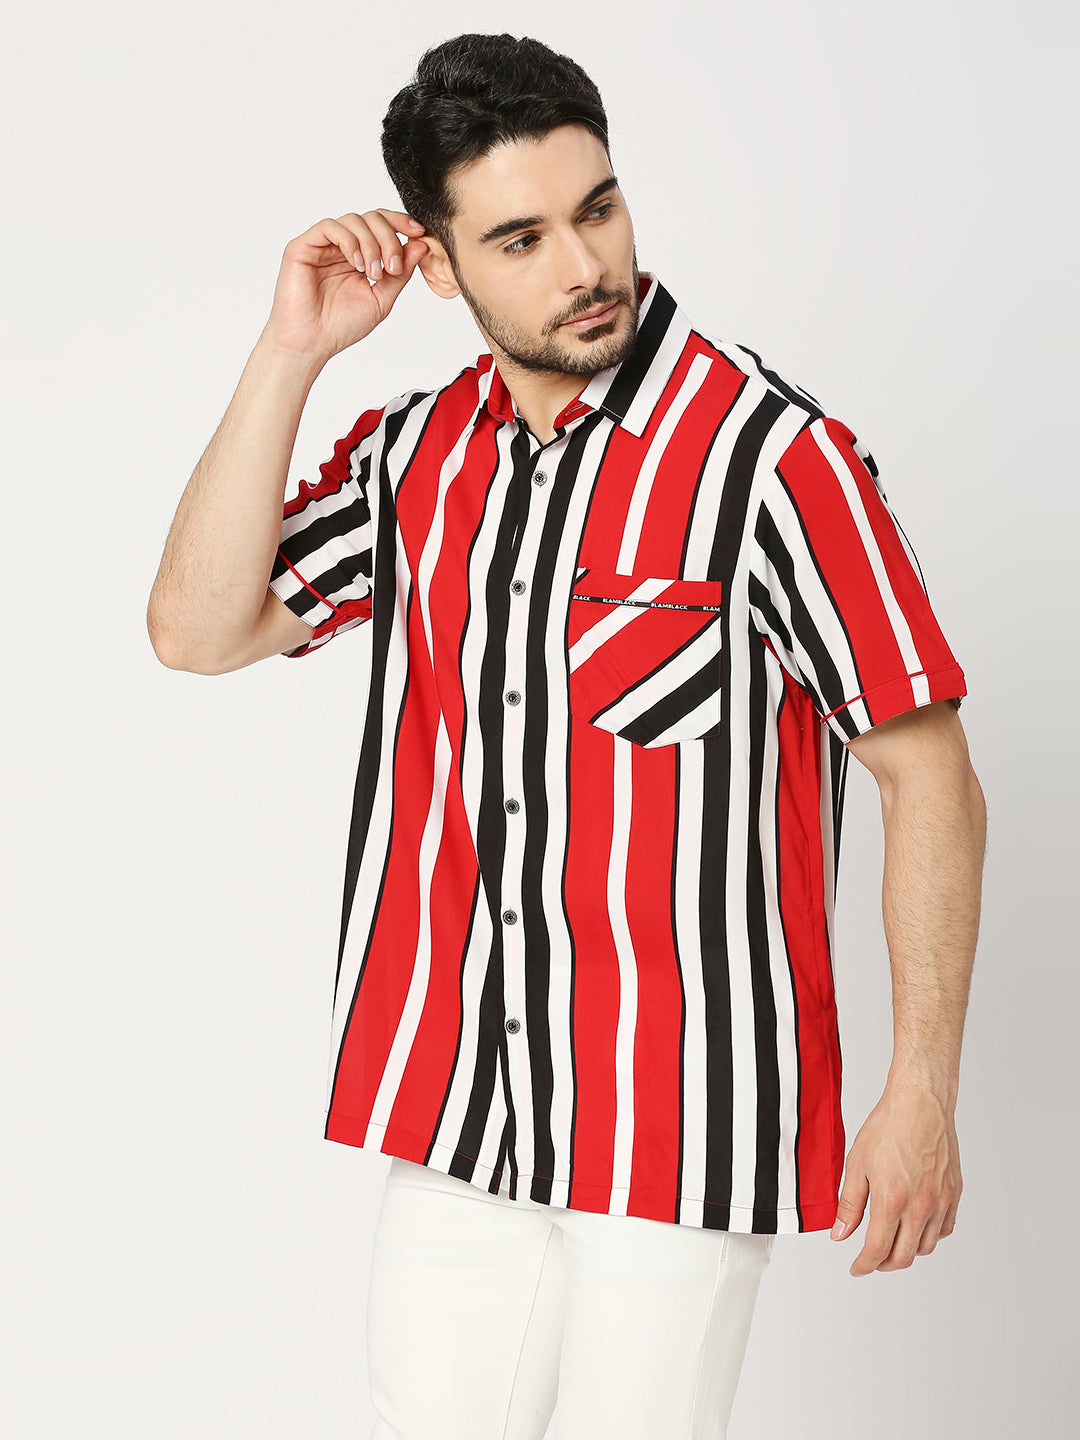 Buy BLAMBLACK Men's multi-colour stripes Regular Fit Half Sleeves spread Collar Shirt